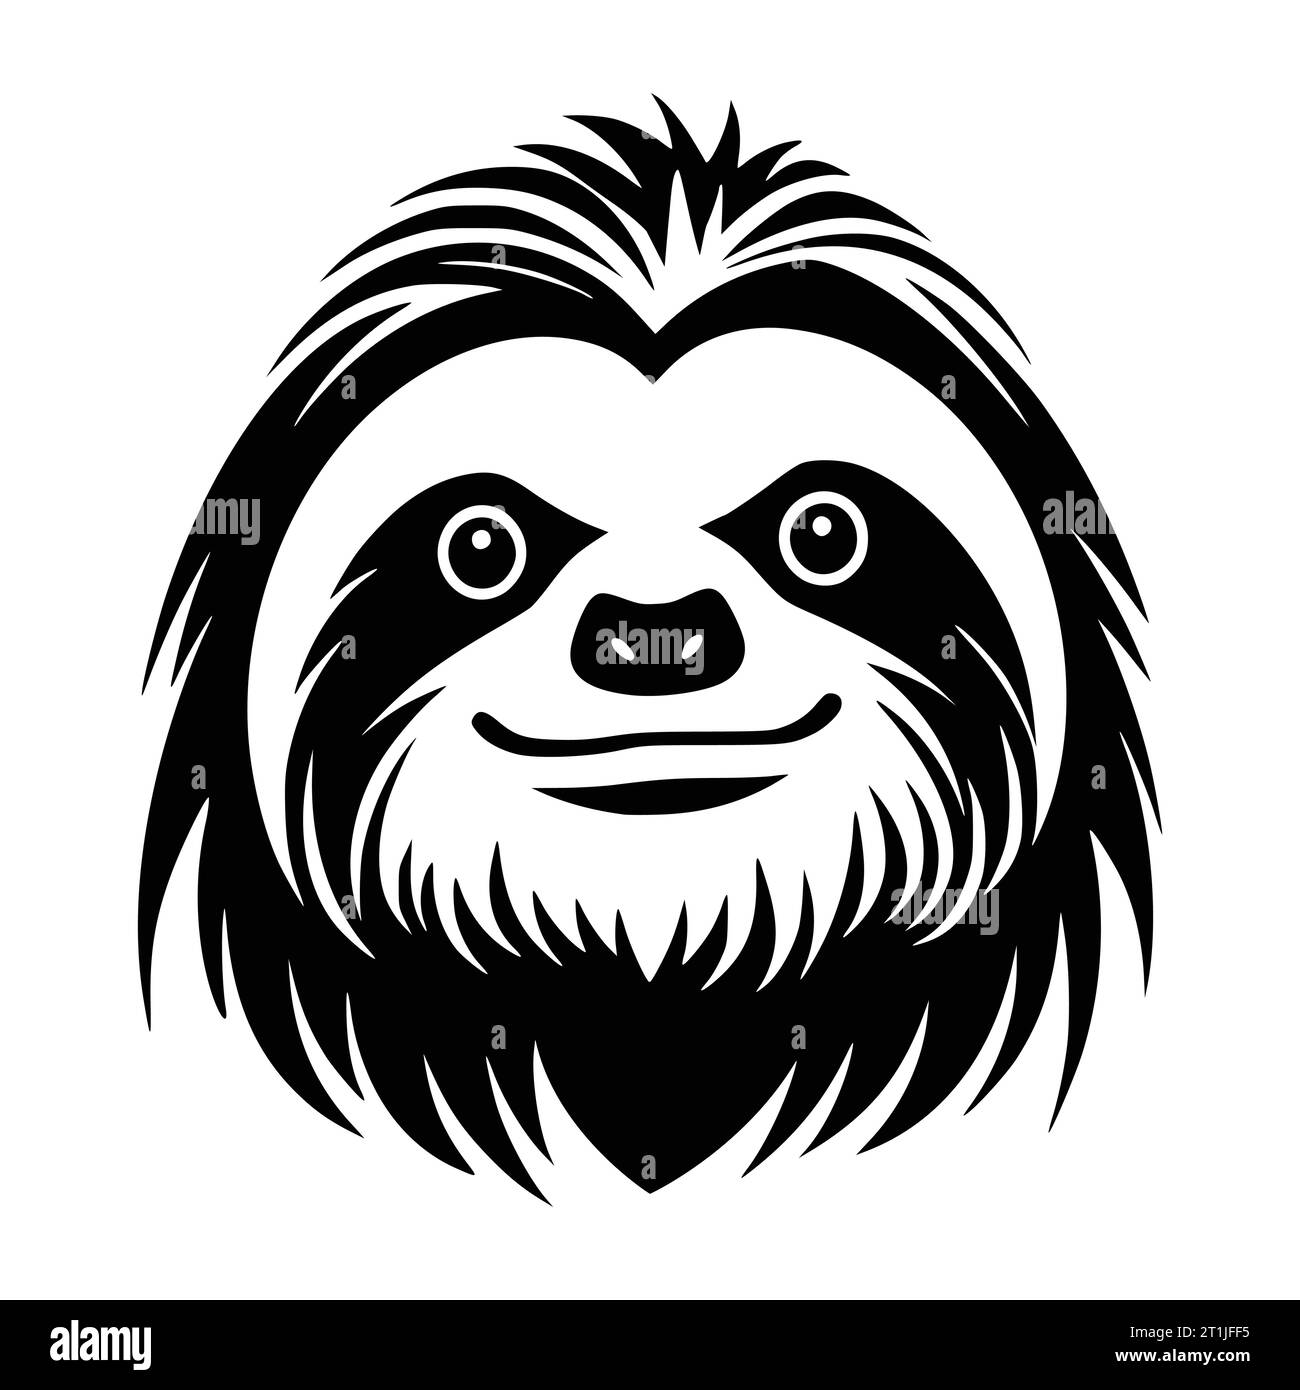 sloth mammal wild animal head illustration for logo or symbol Stock Vector